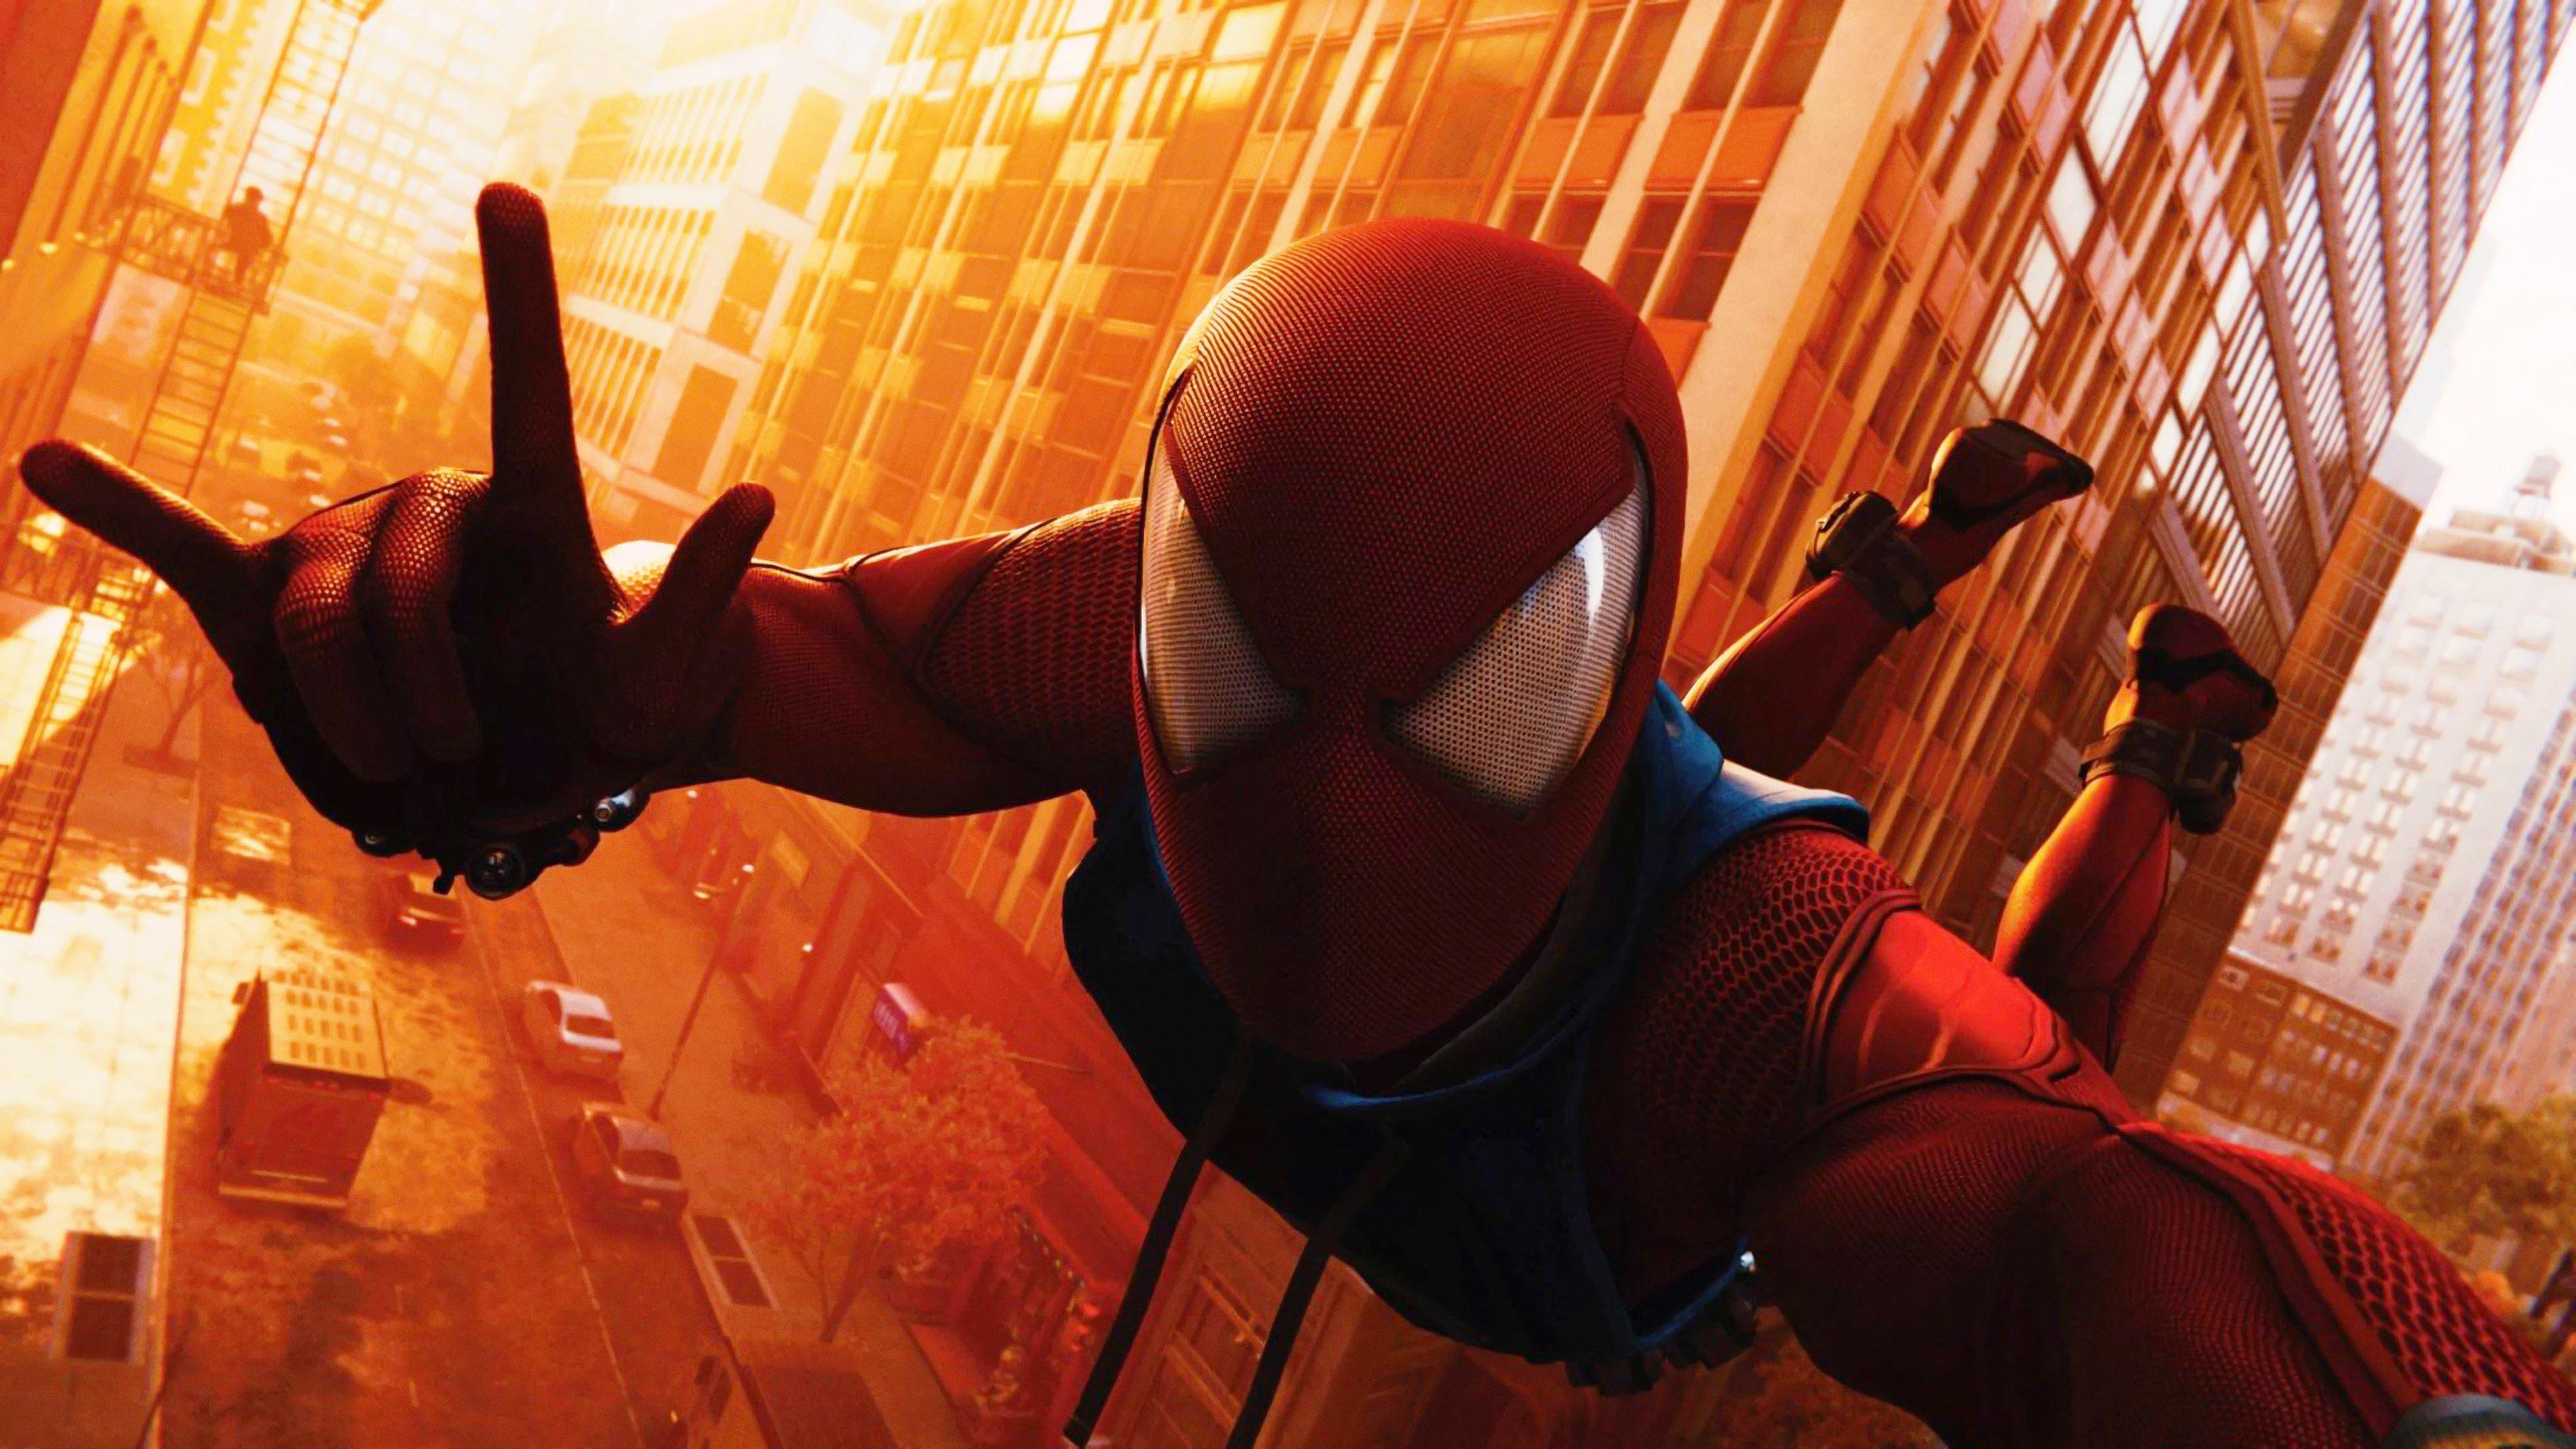 Wallpaper Scarlet Suit Video Game Spider Man